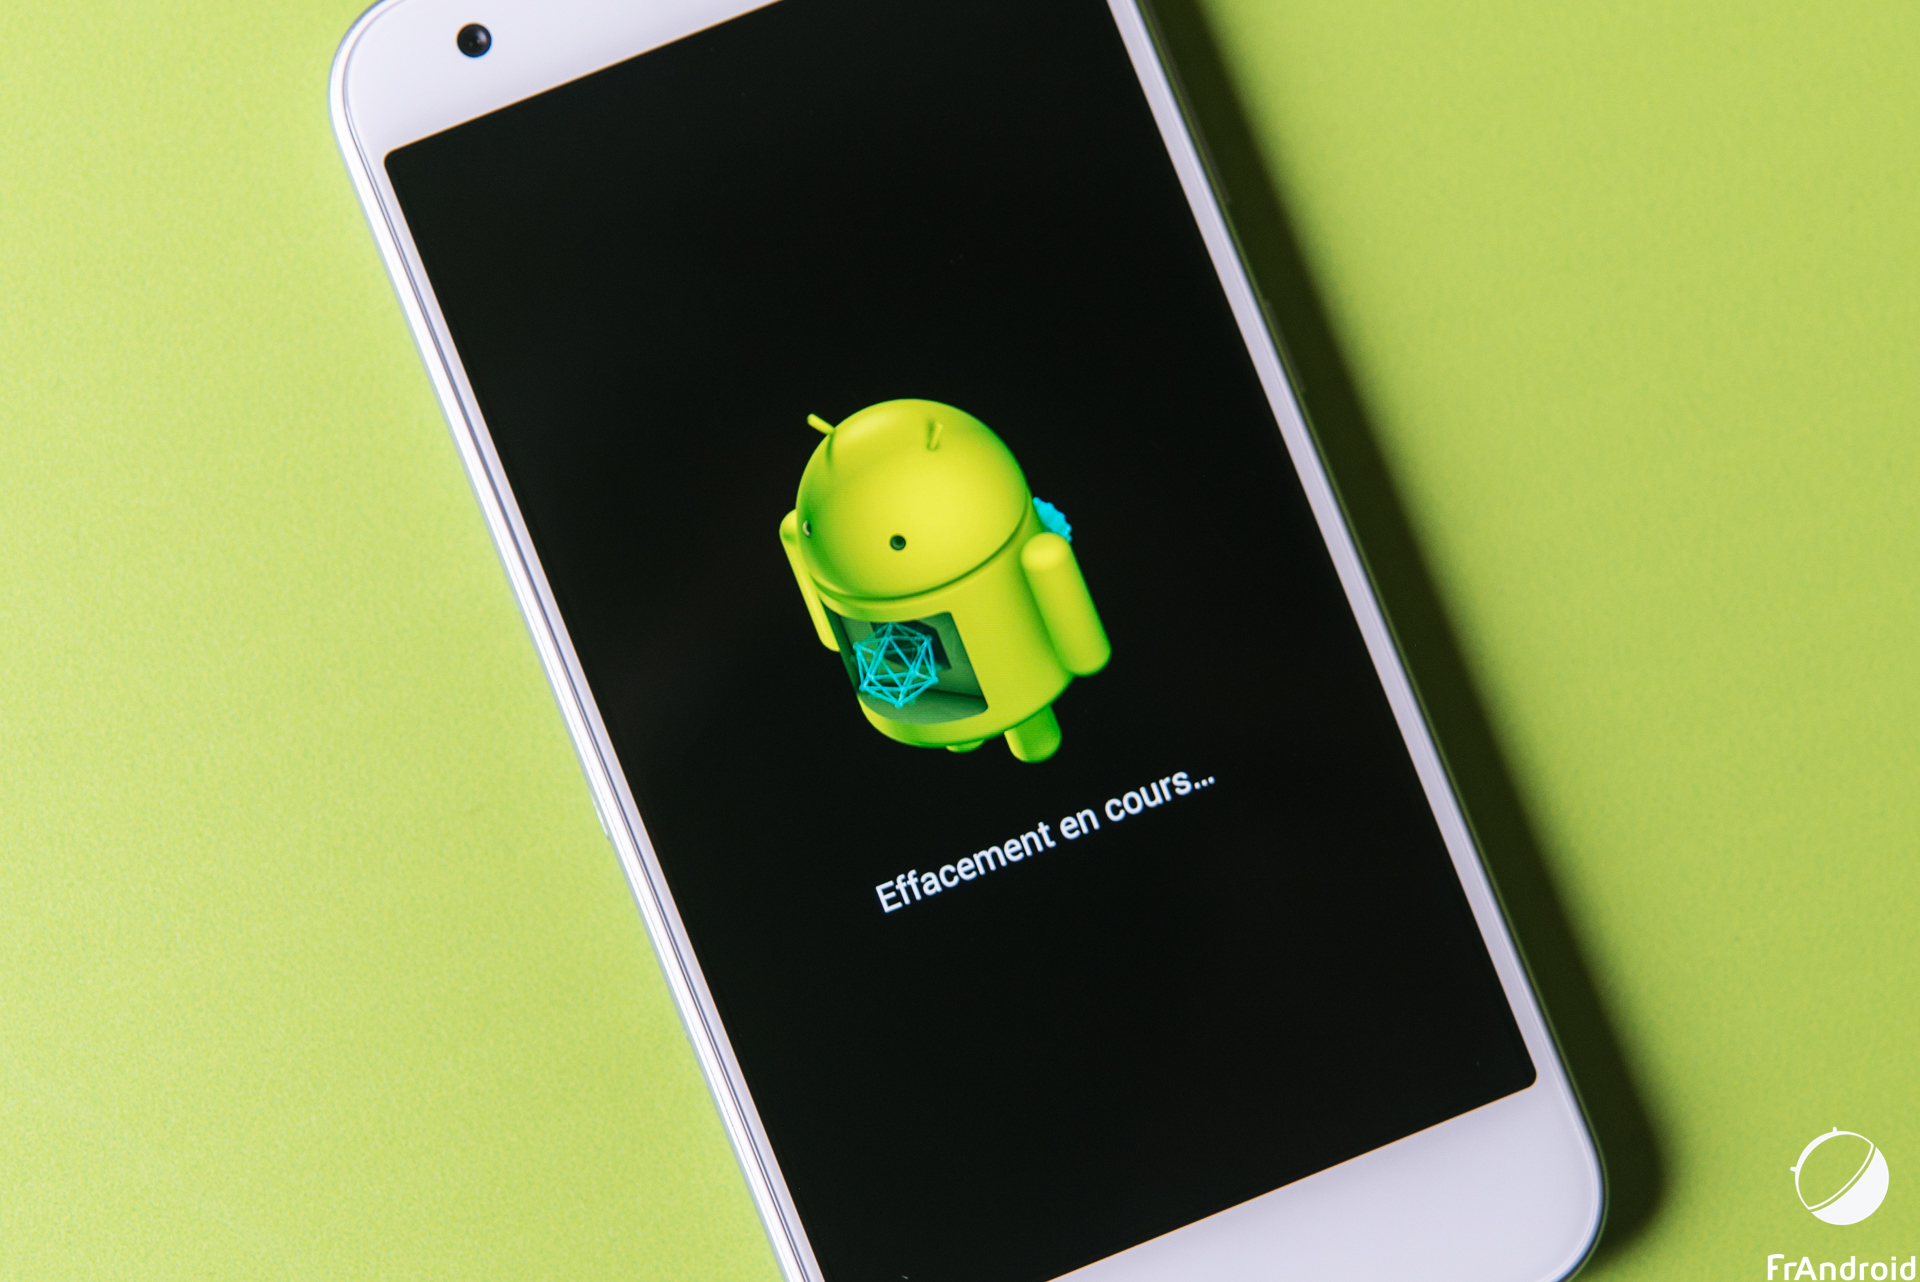 Телефоны базе android. Смартфон андроид. Android телефон. Телефон Android фото. Смартфон на базе андроид.